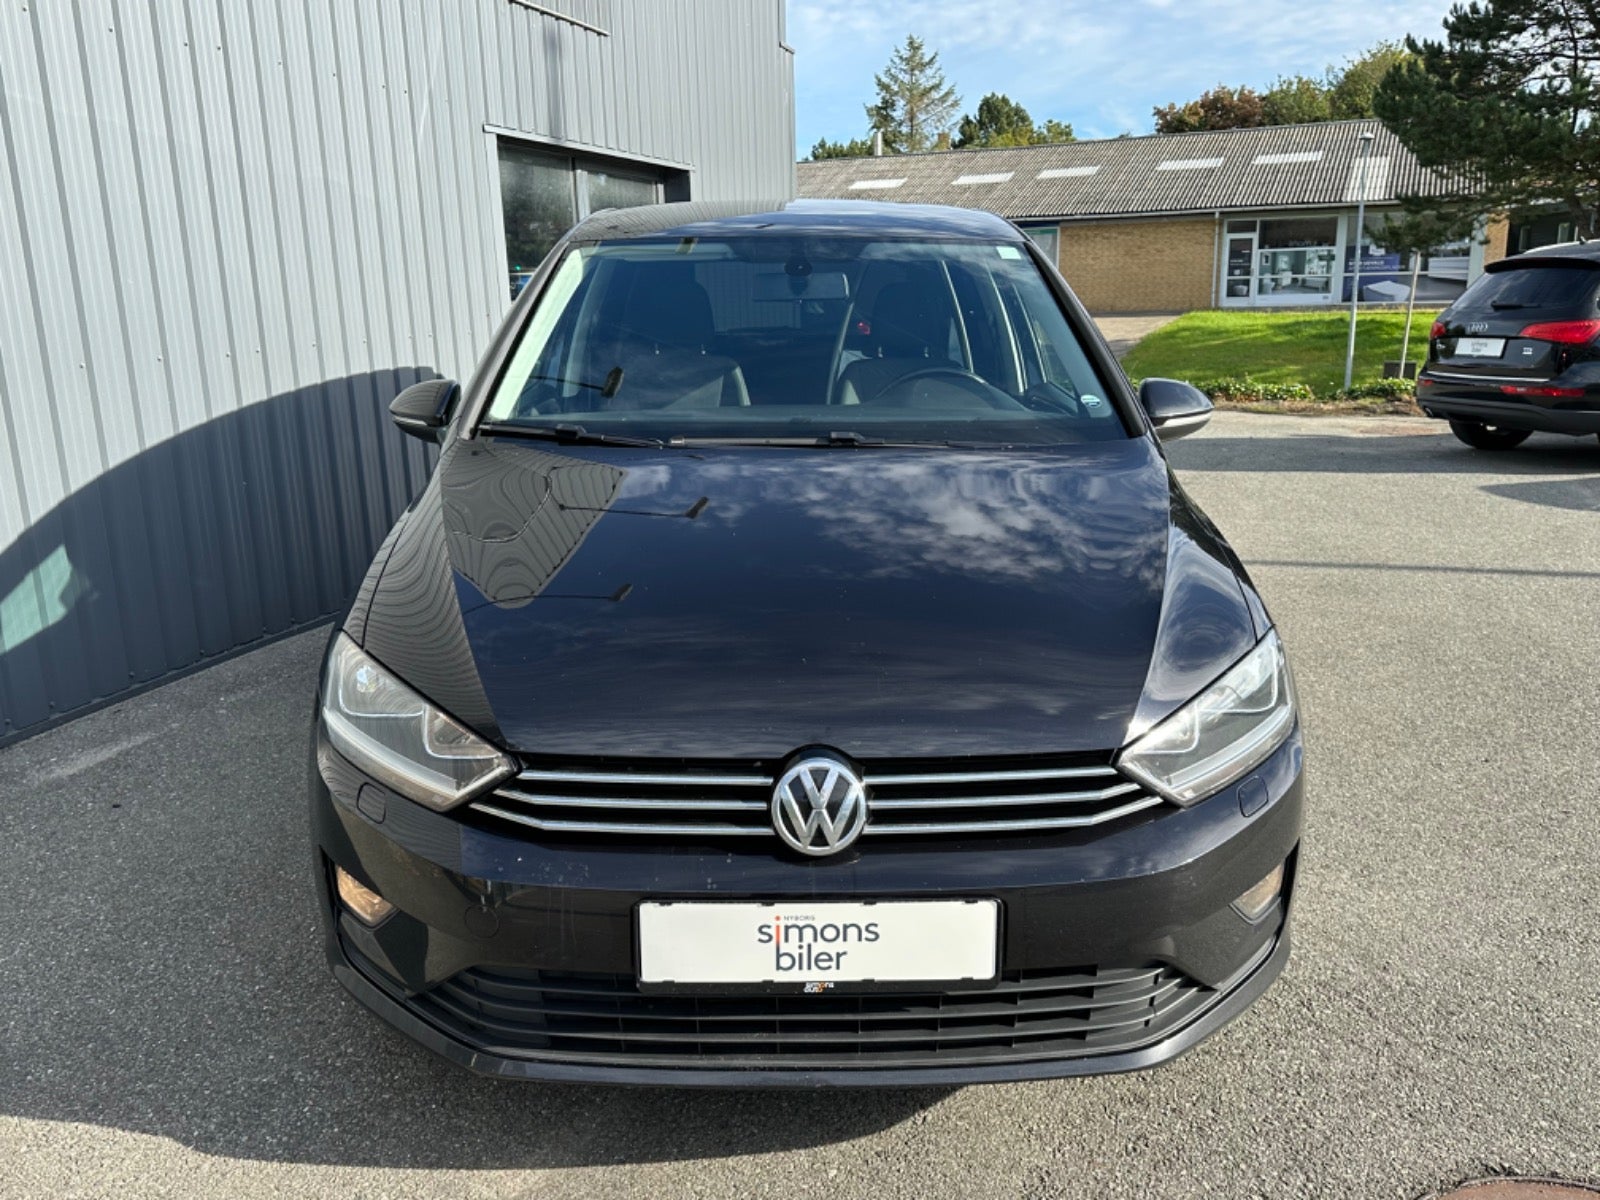 VW Golf Sportsvan 2015